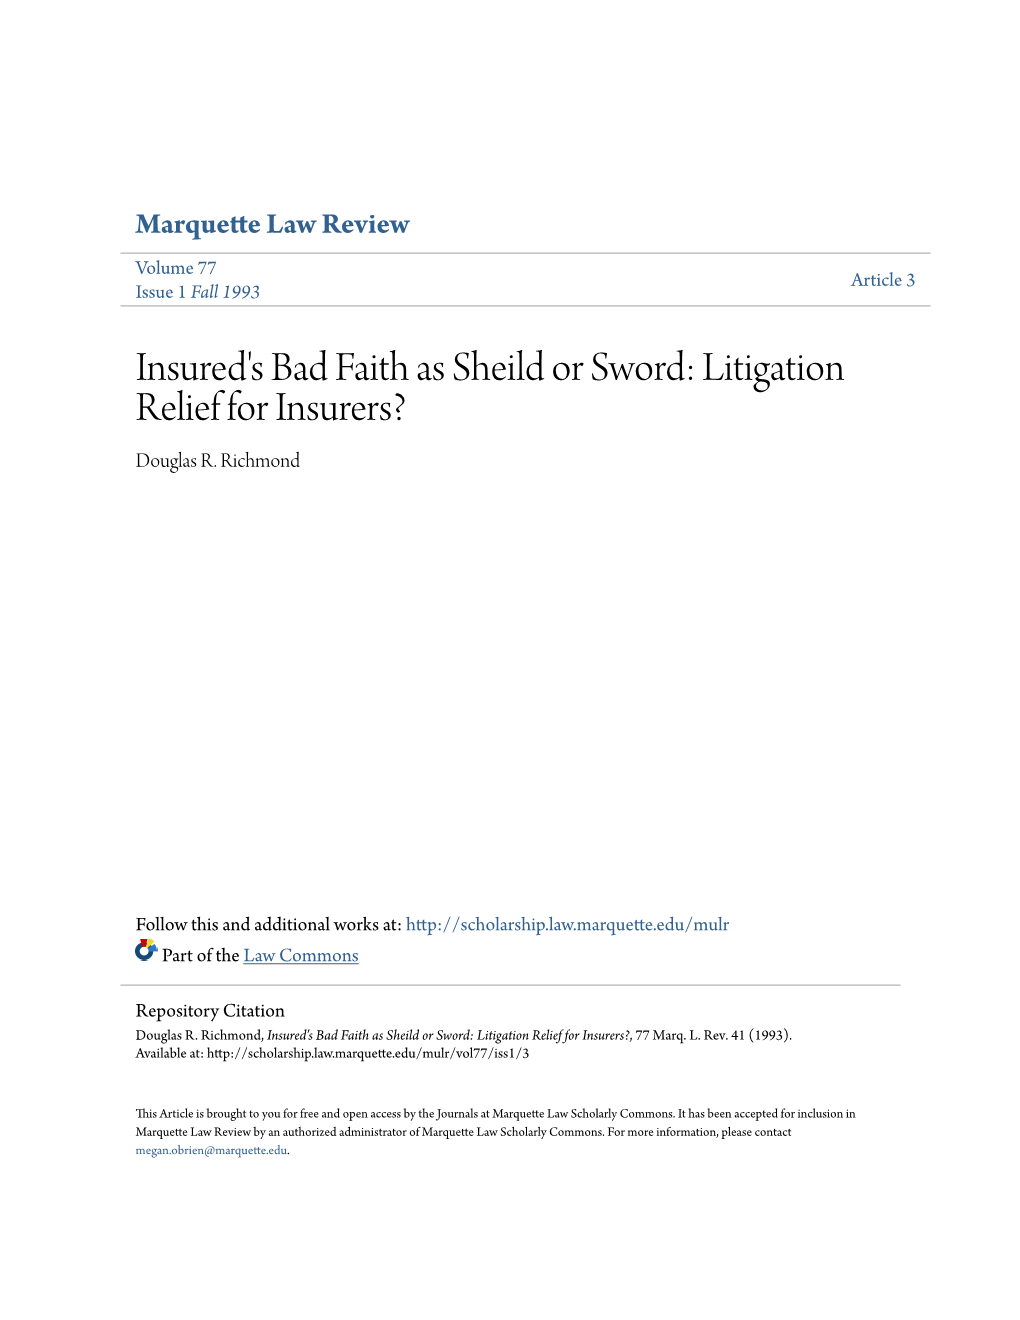 Insured's Bad Faith As Sheild Or Sword: Litigation Relief for Insurers? Douglas R